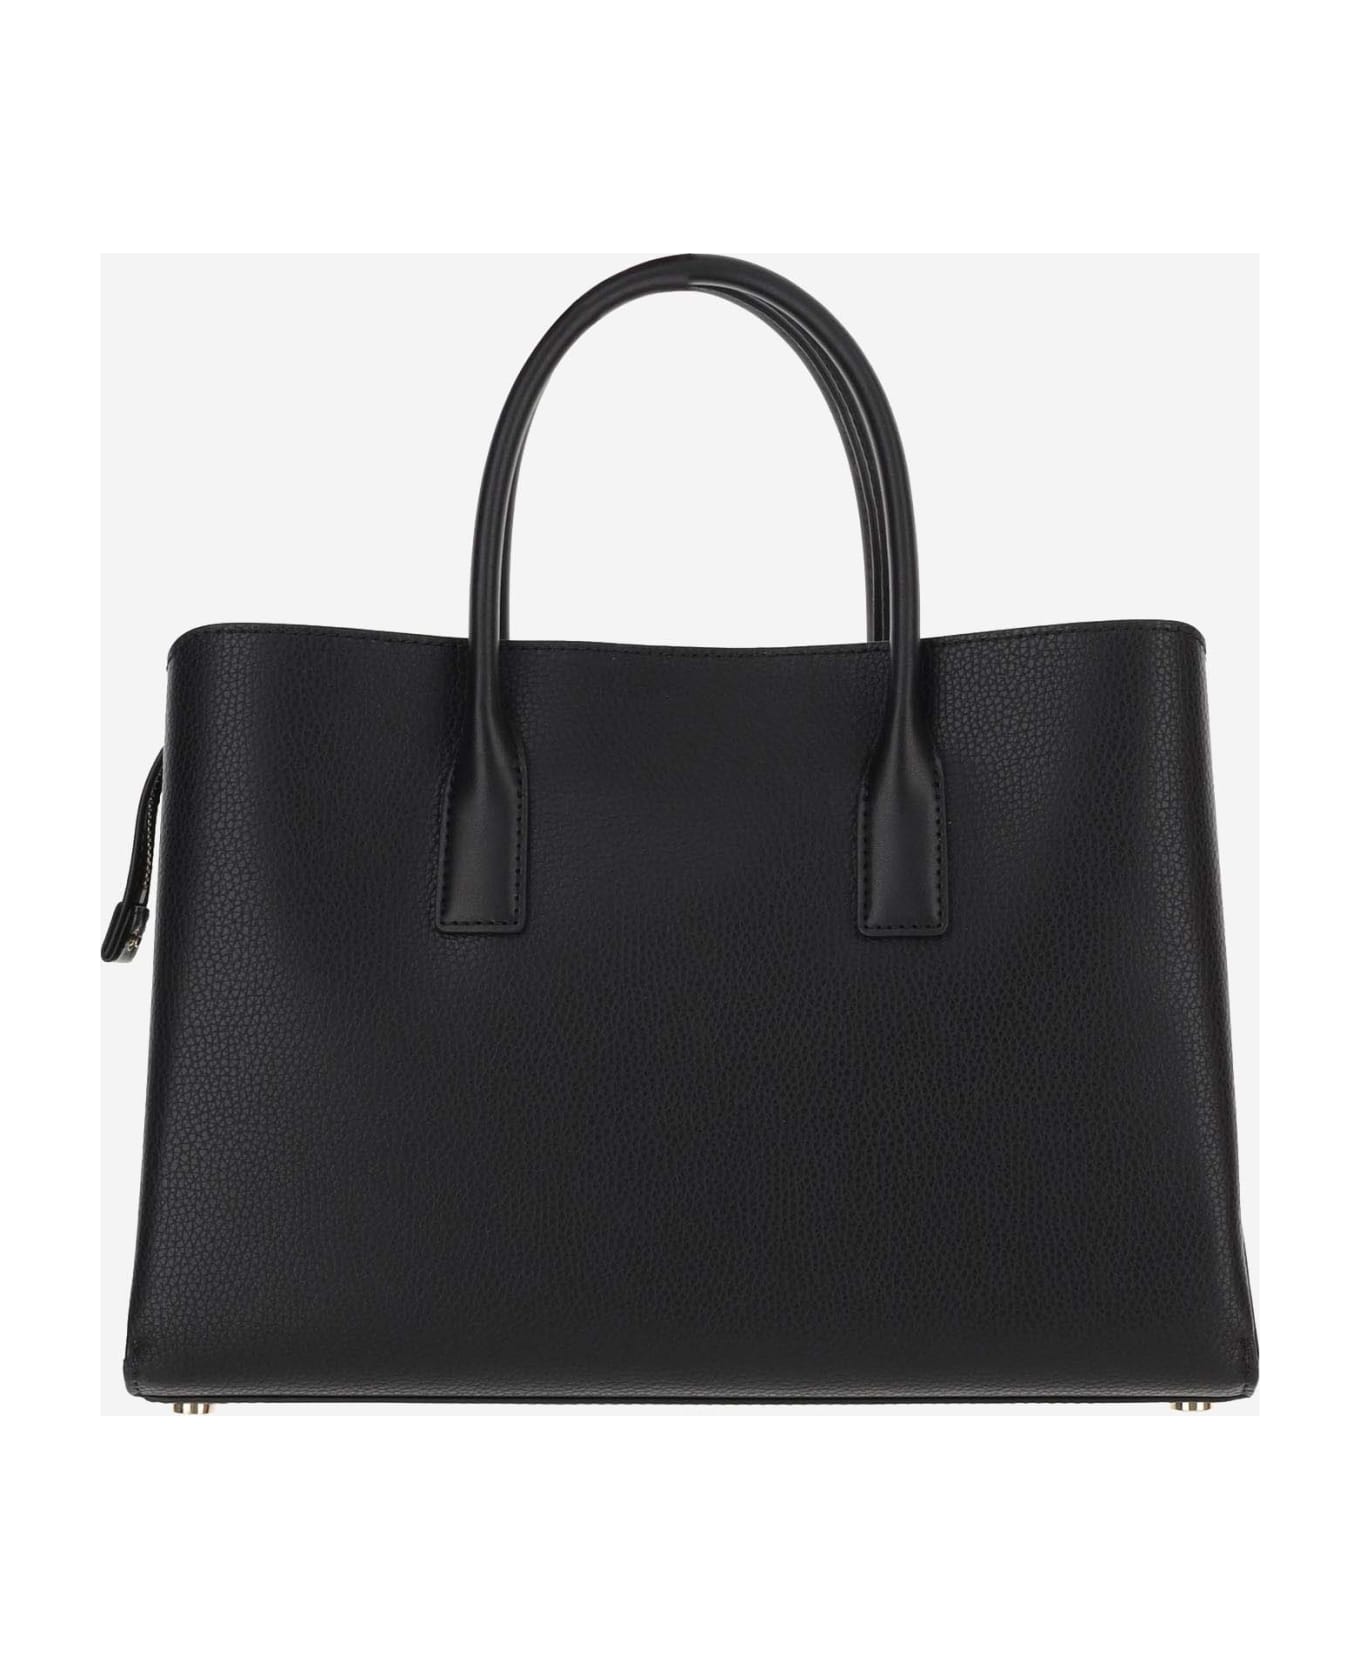 Michael Kors Ruthie Large Leather Handbag - Black